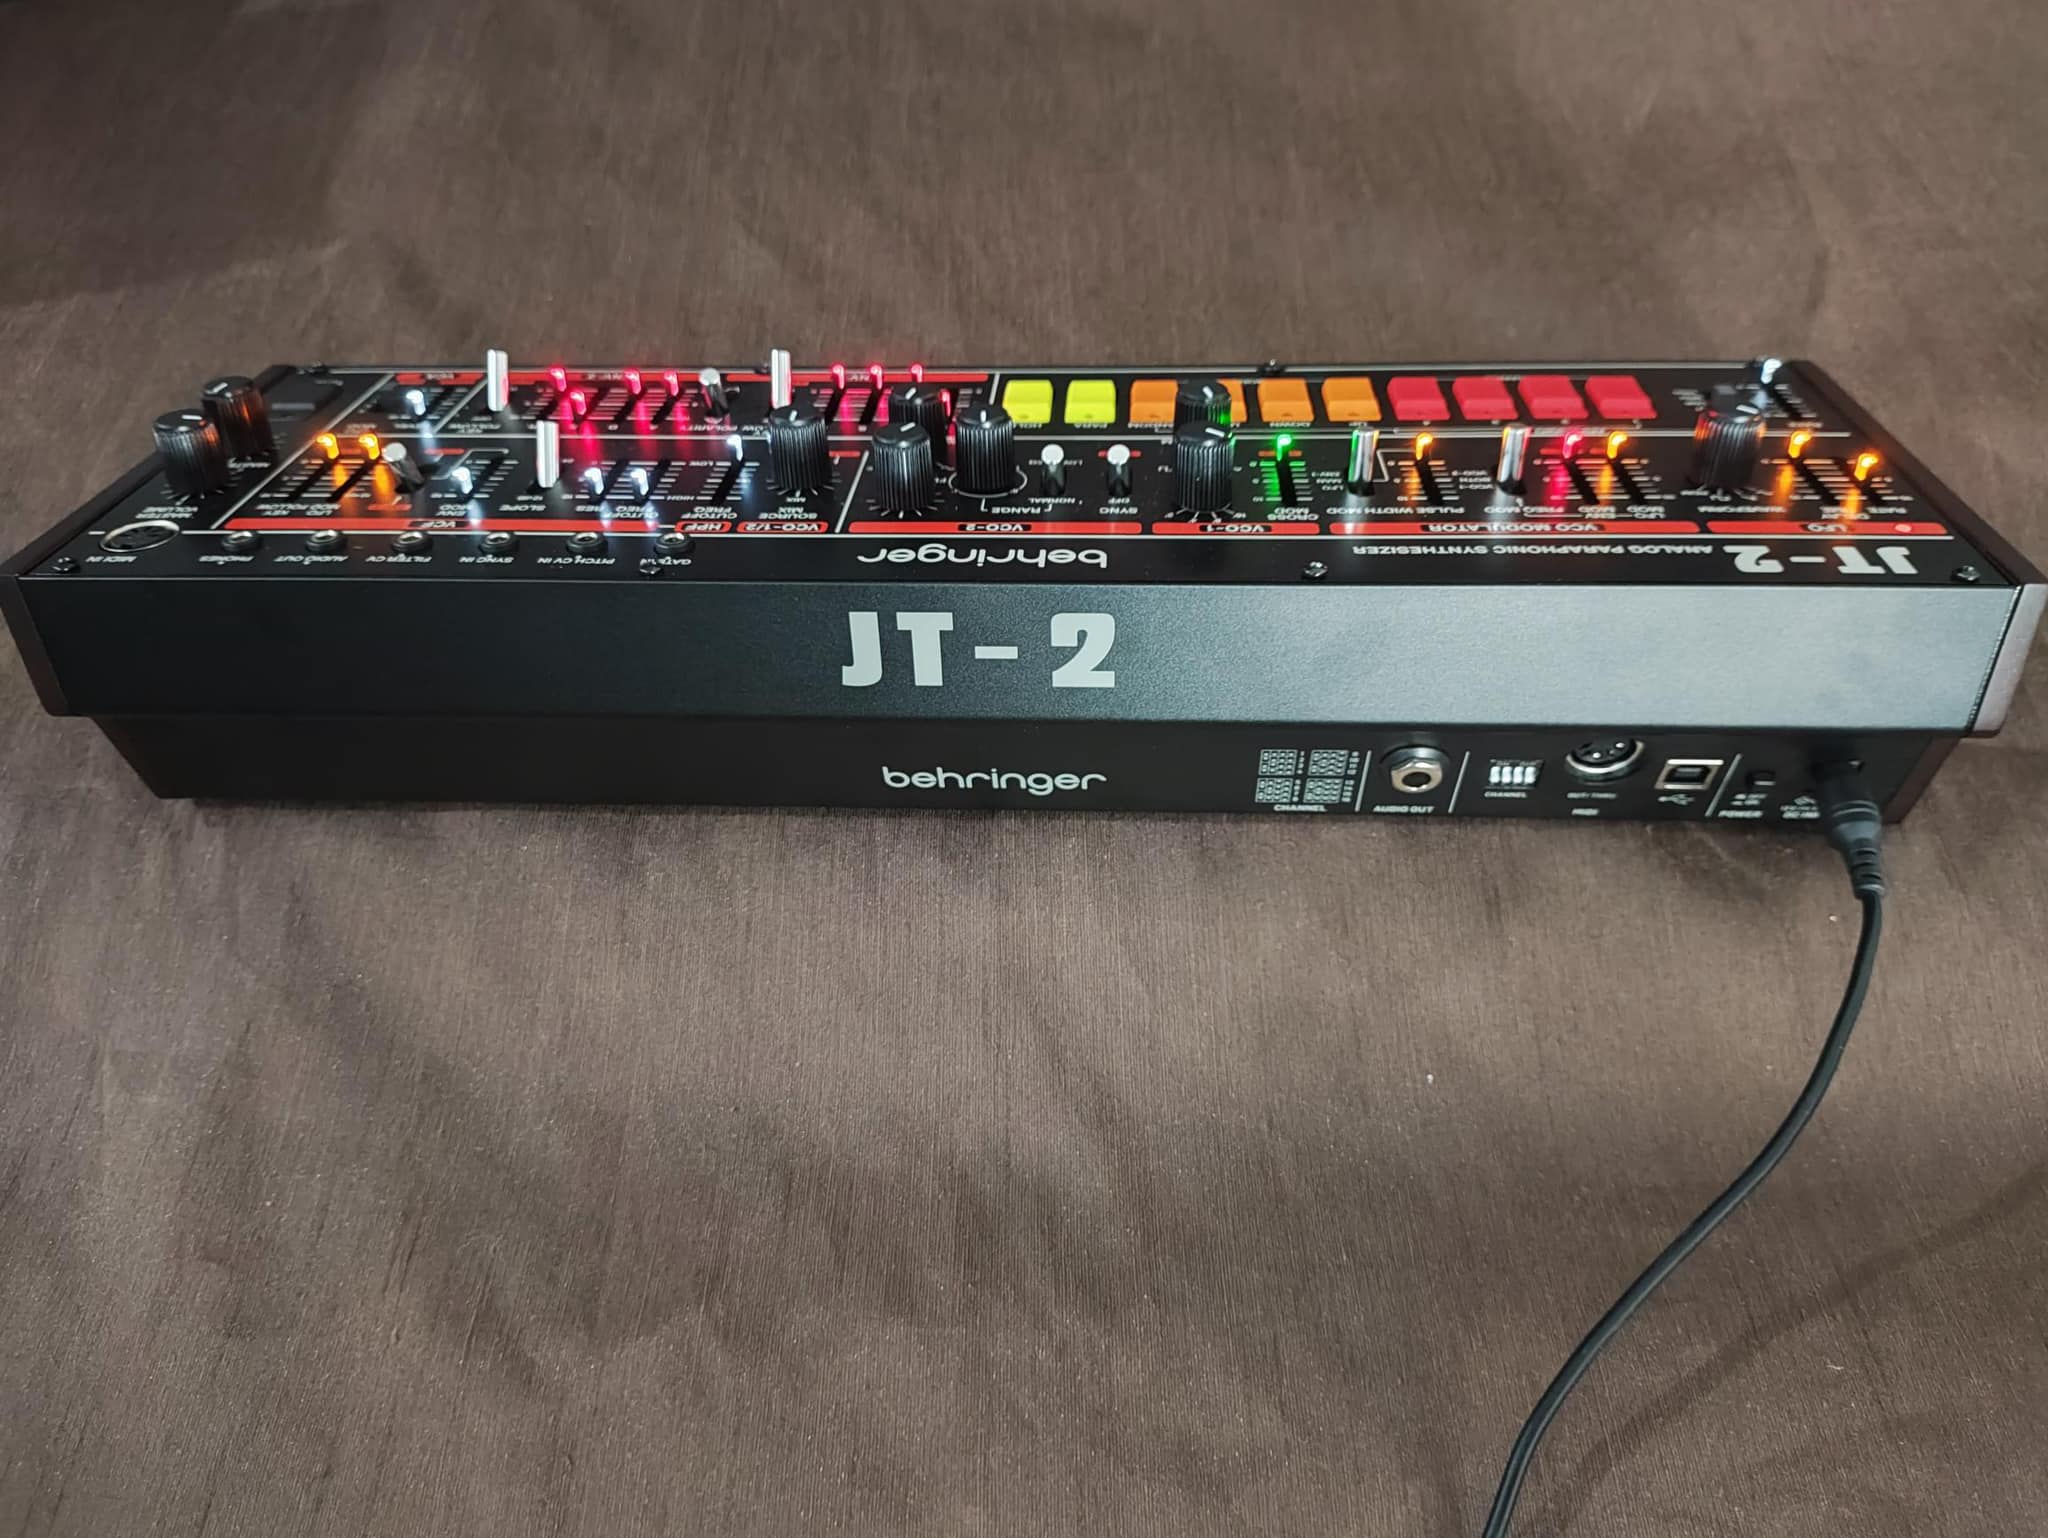 Behringer JT-2 synthesizer